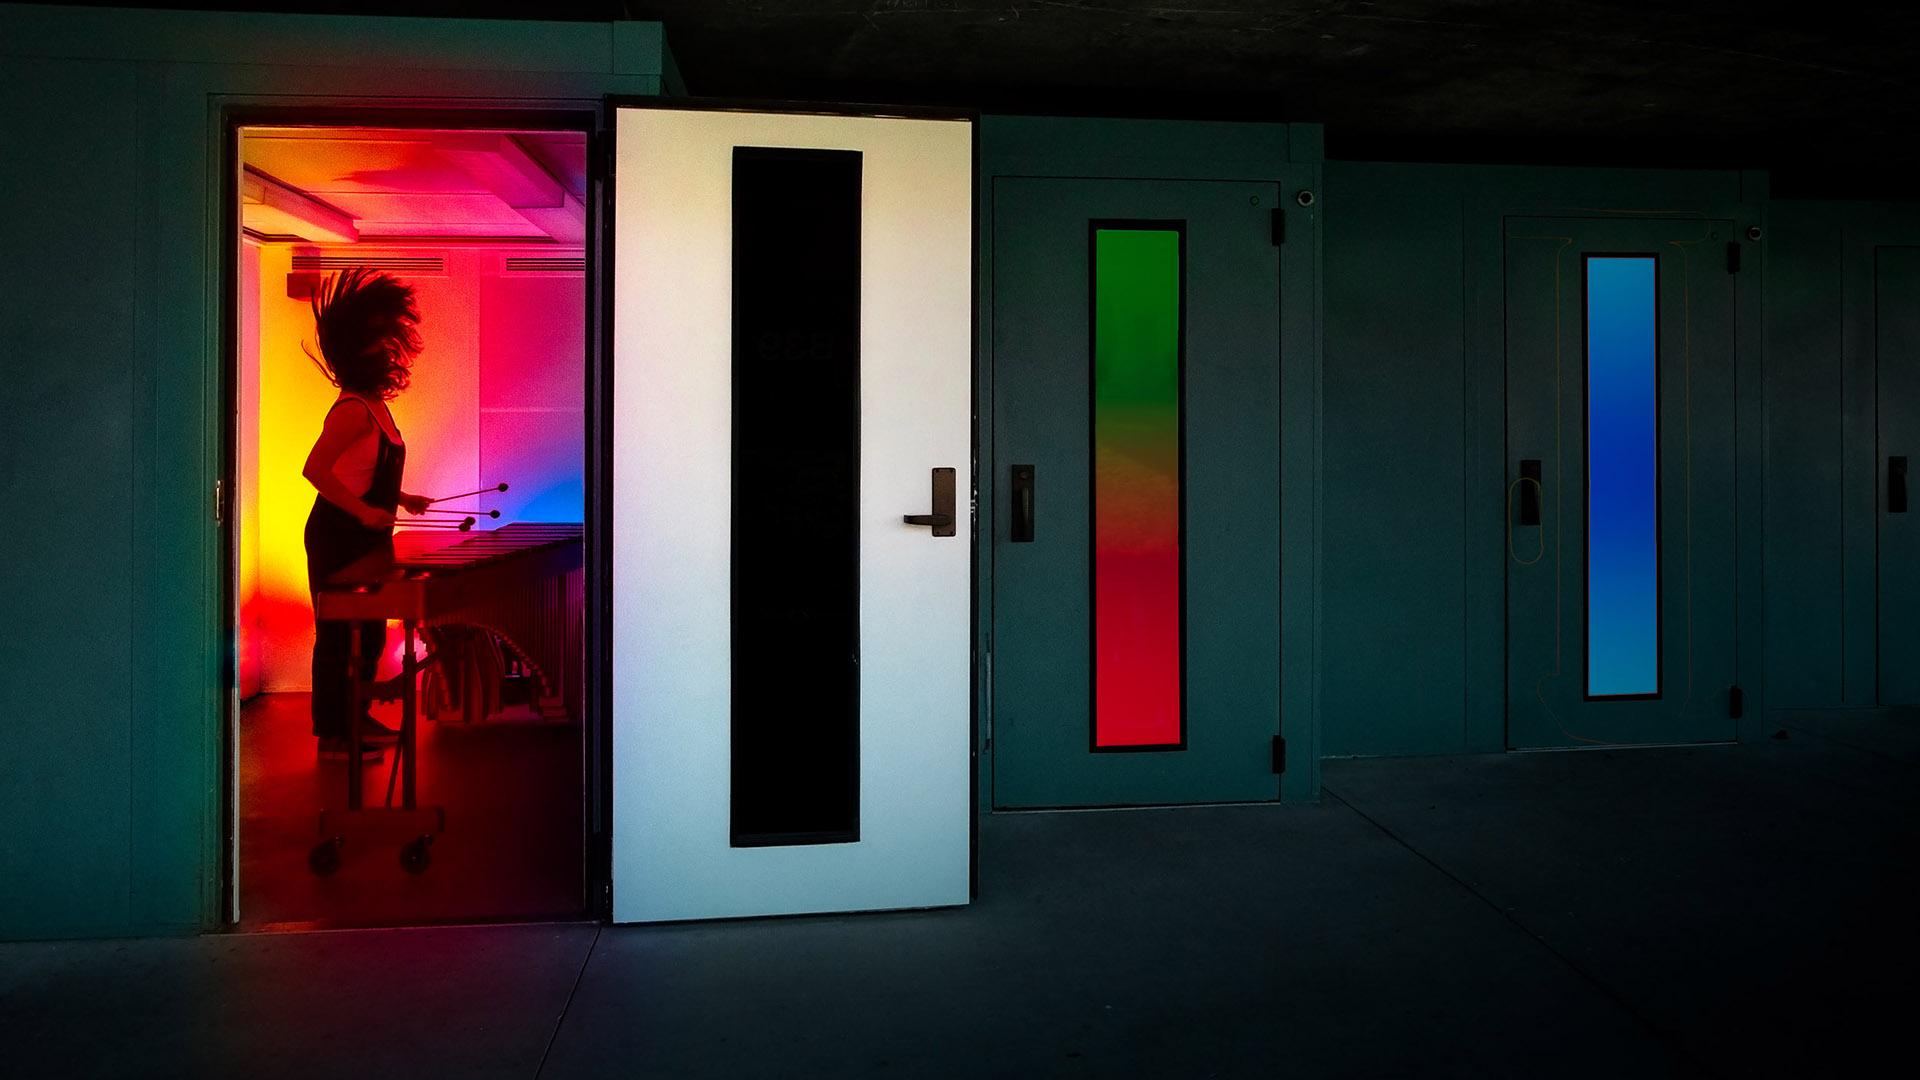 A colorful campus lab